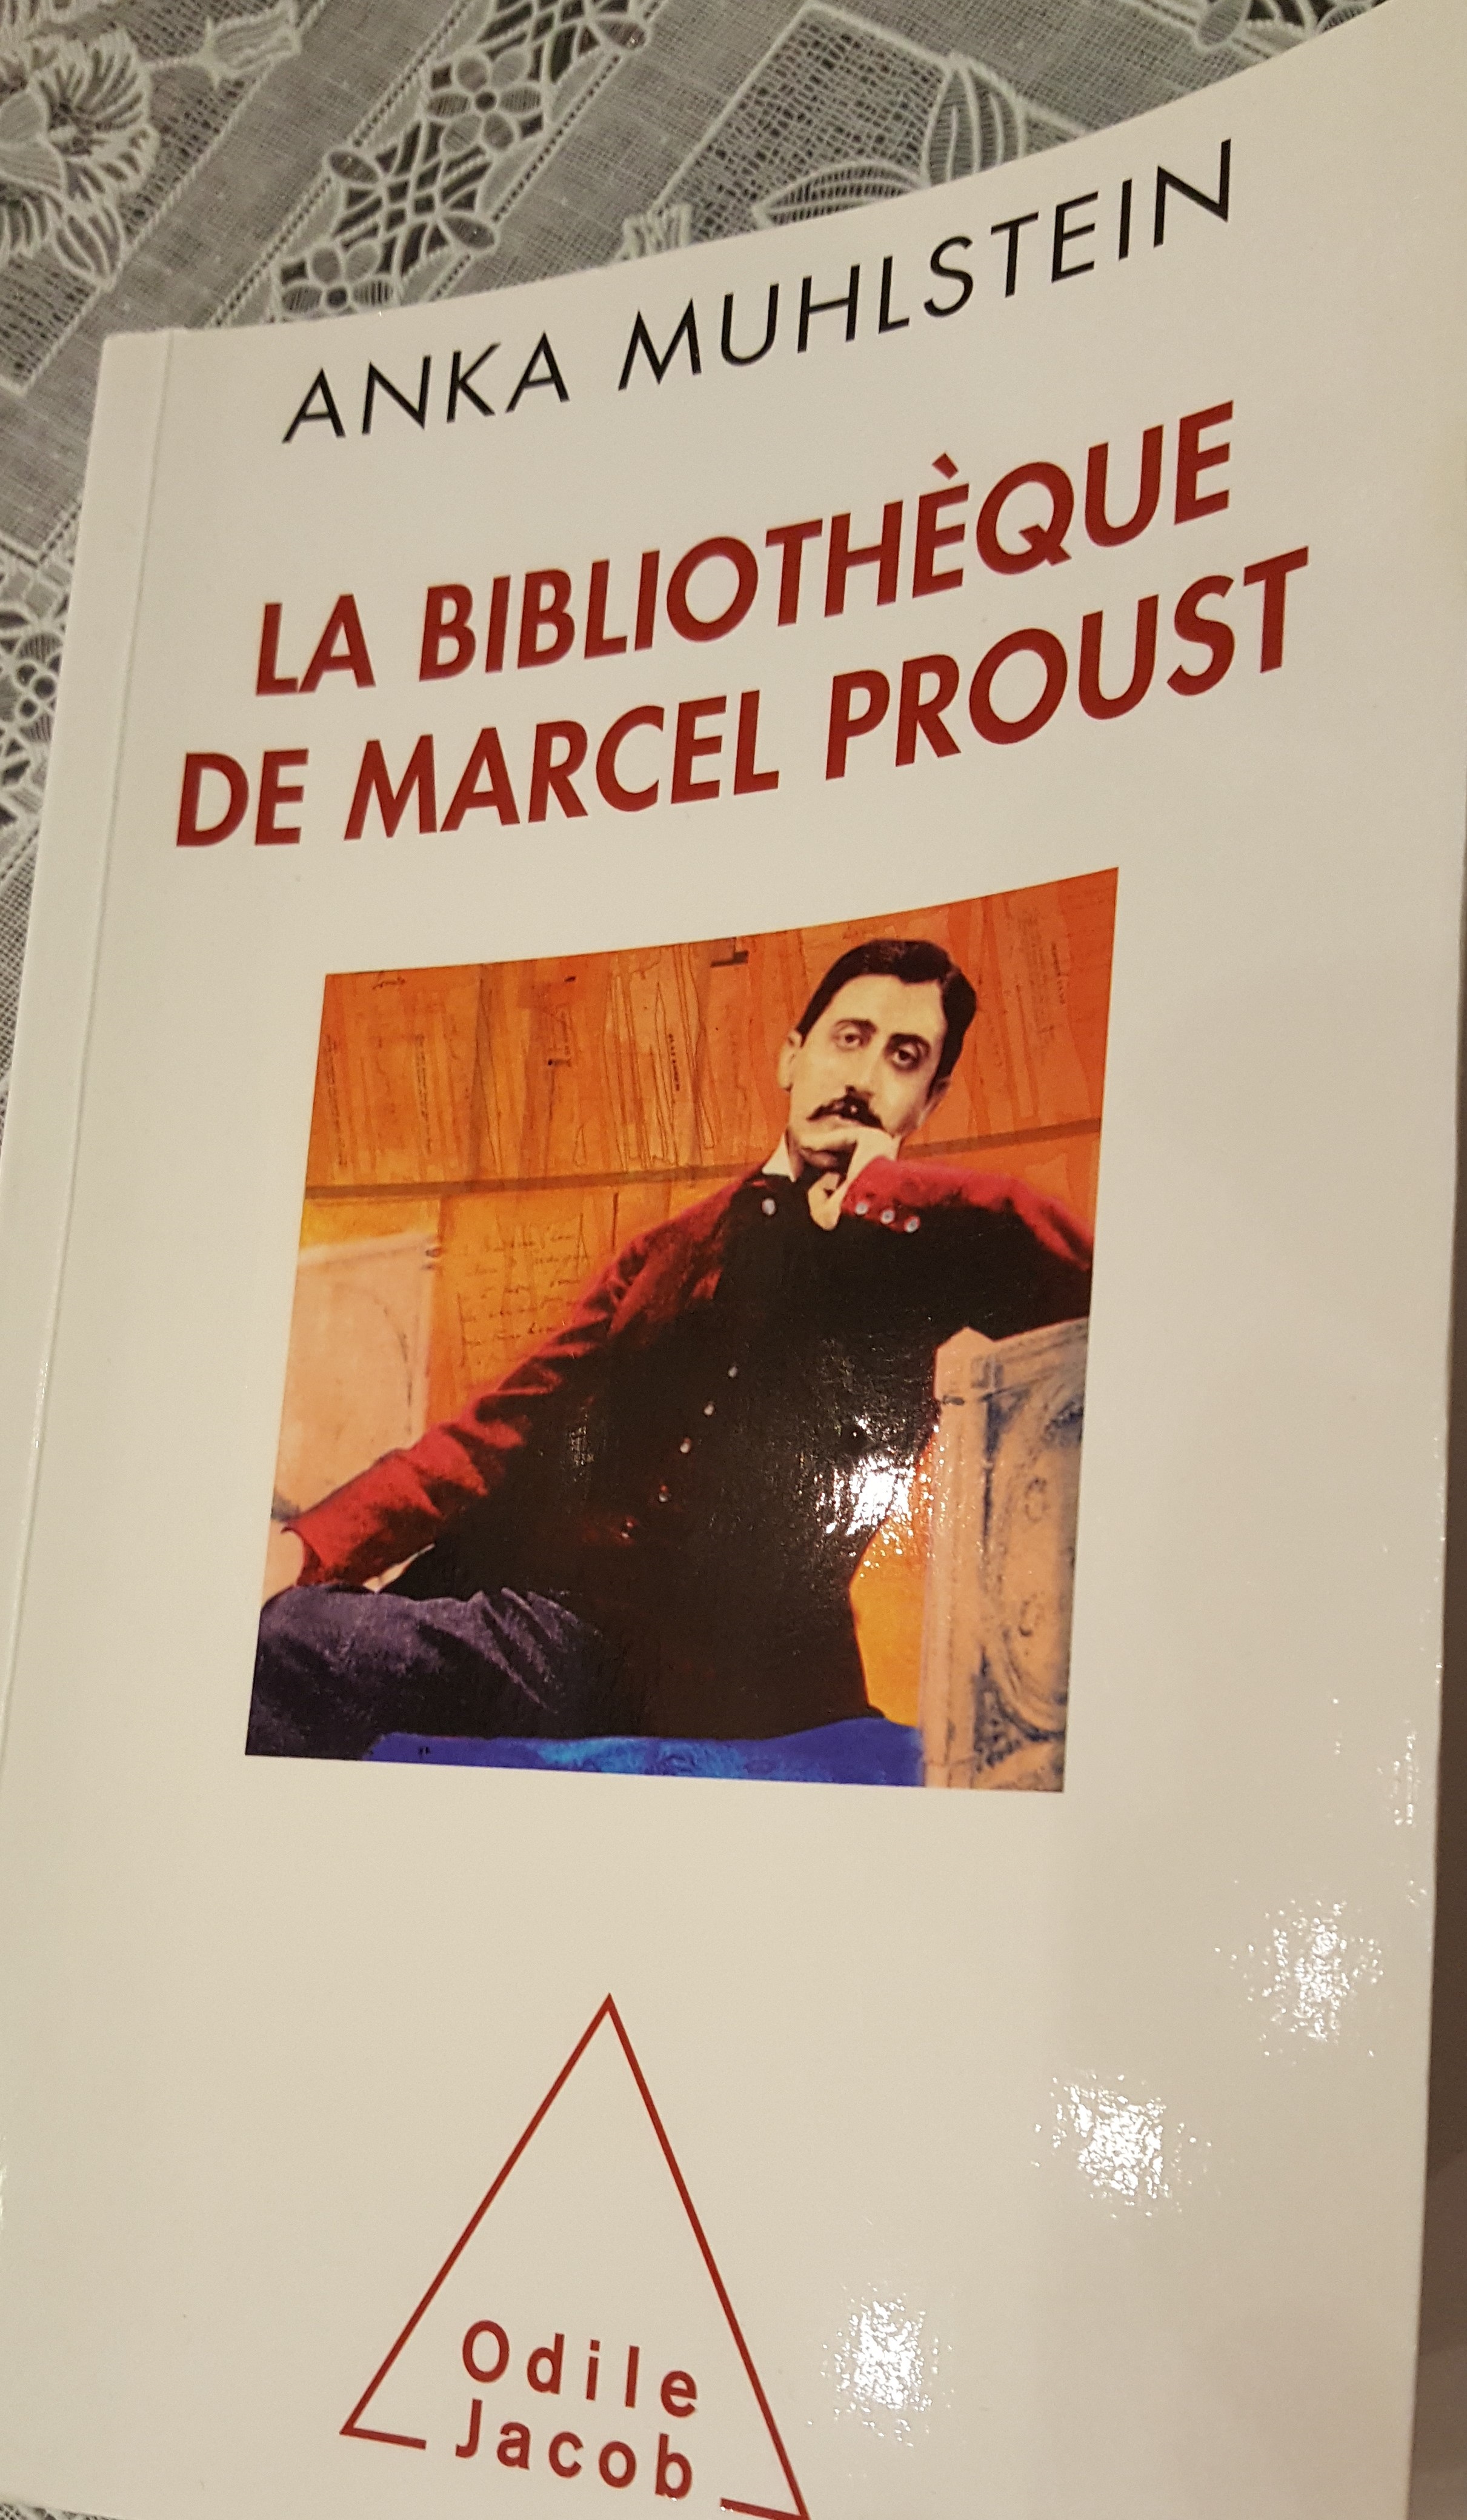 “La Bibliothèque de Marcel Proust”, de Anka Muhlstein